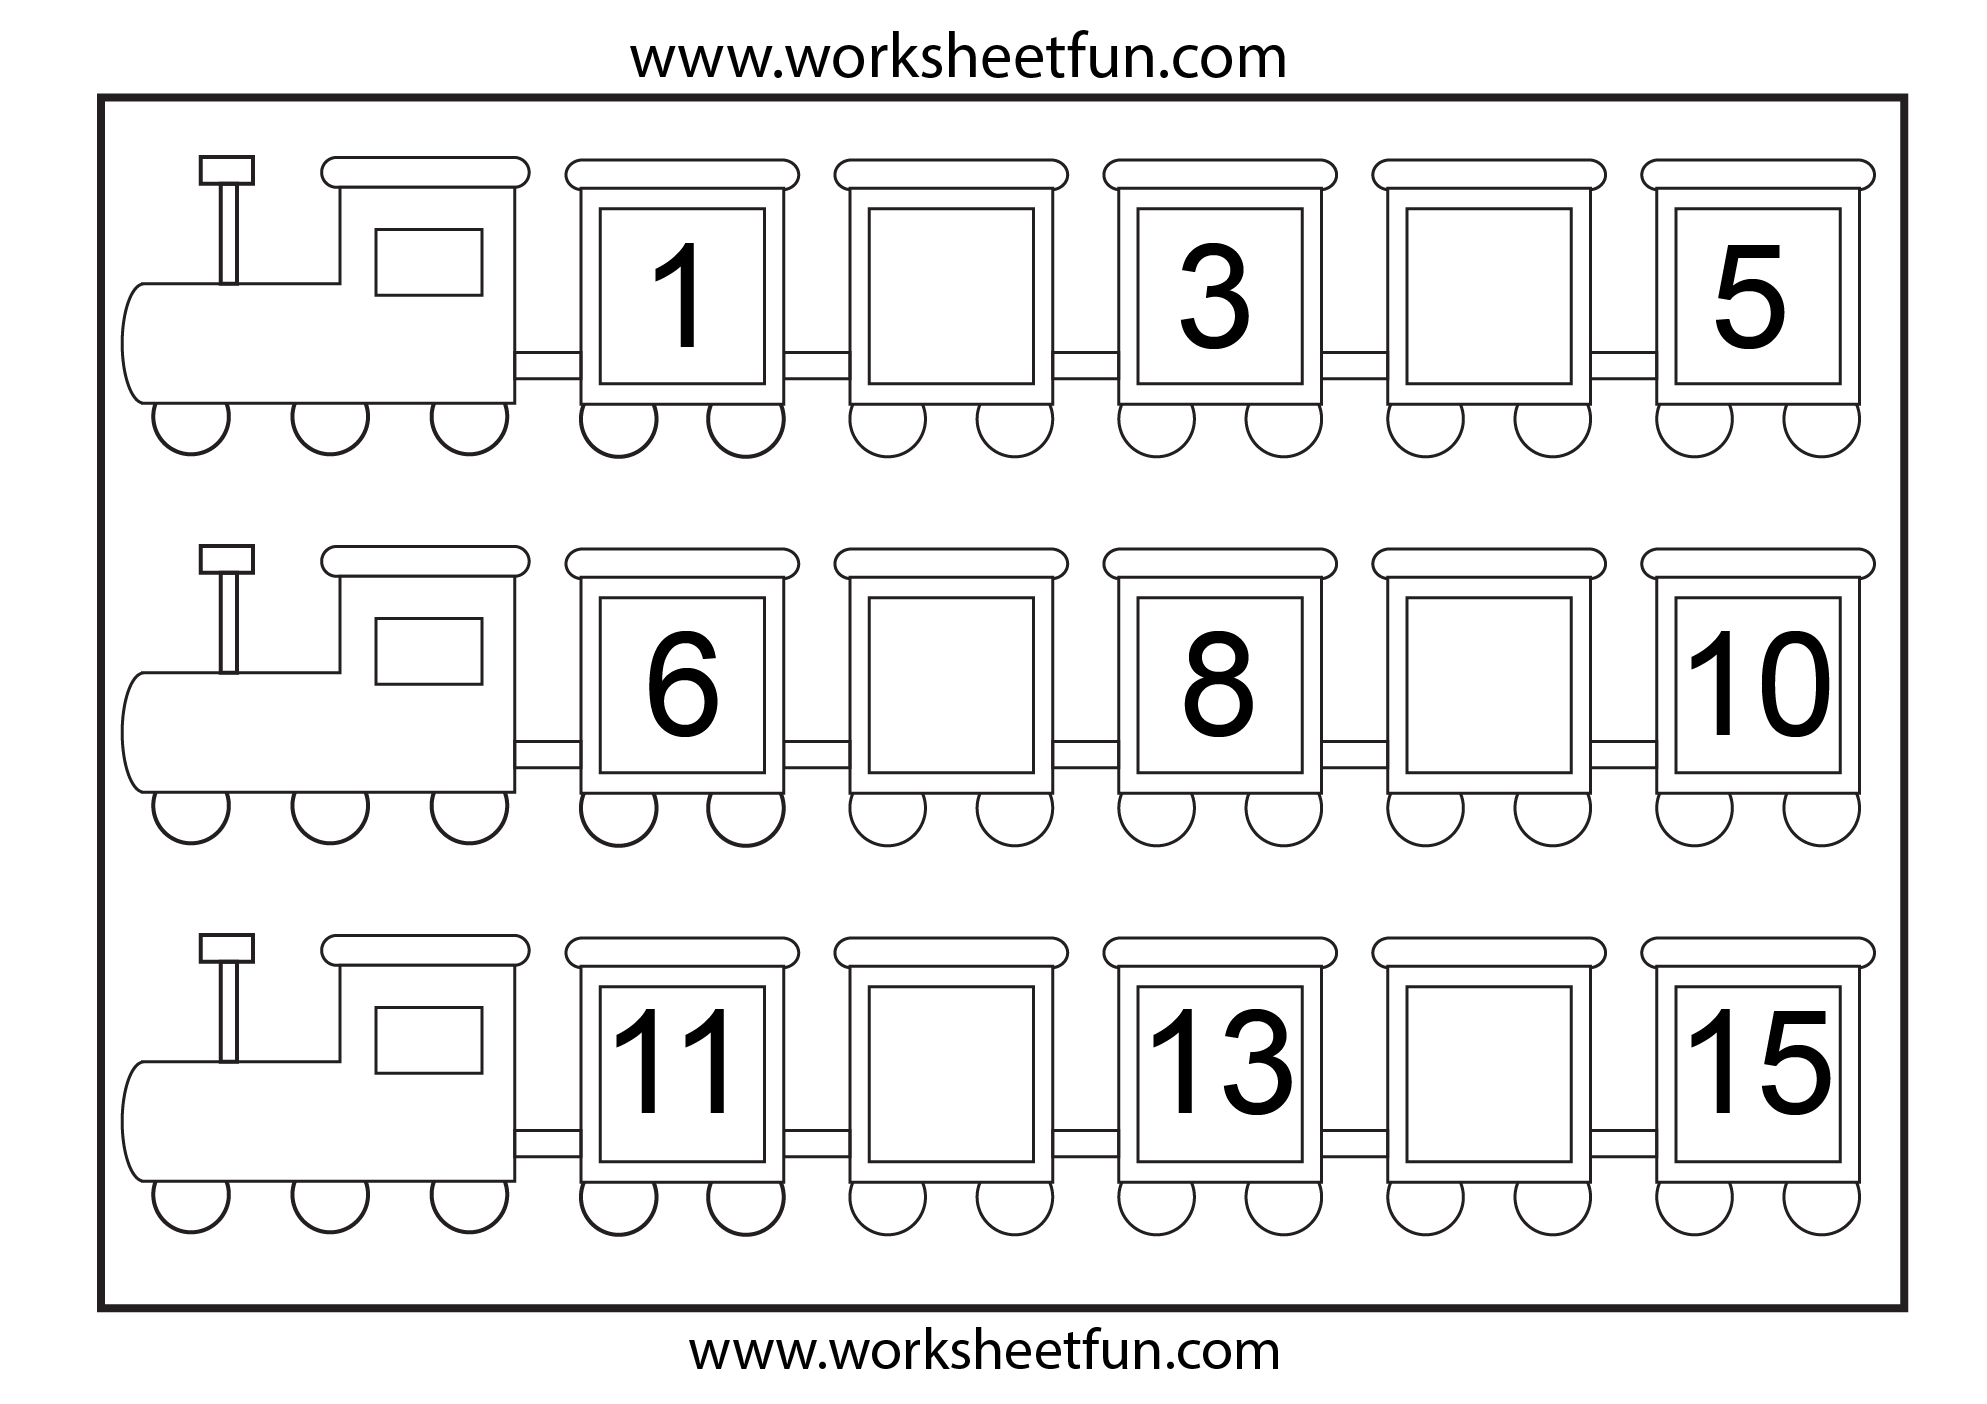 Worksheet Number Worksheets For Preschool Grass Fedjp Worksheet Study Site